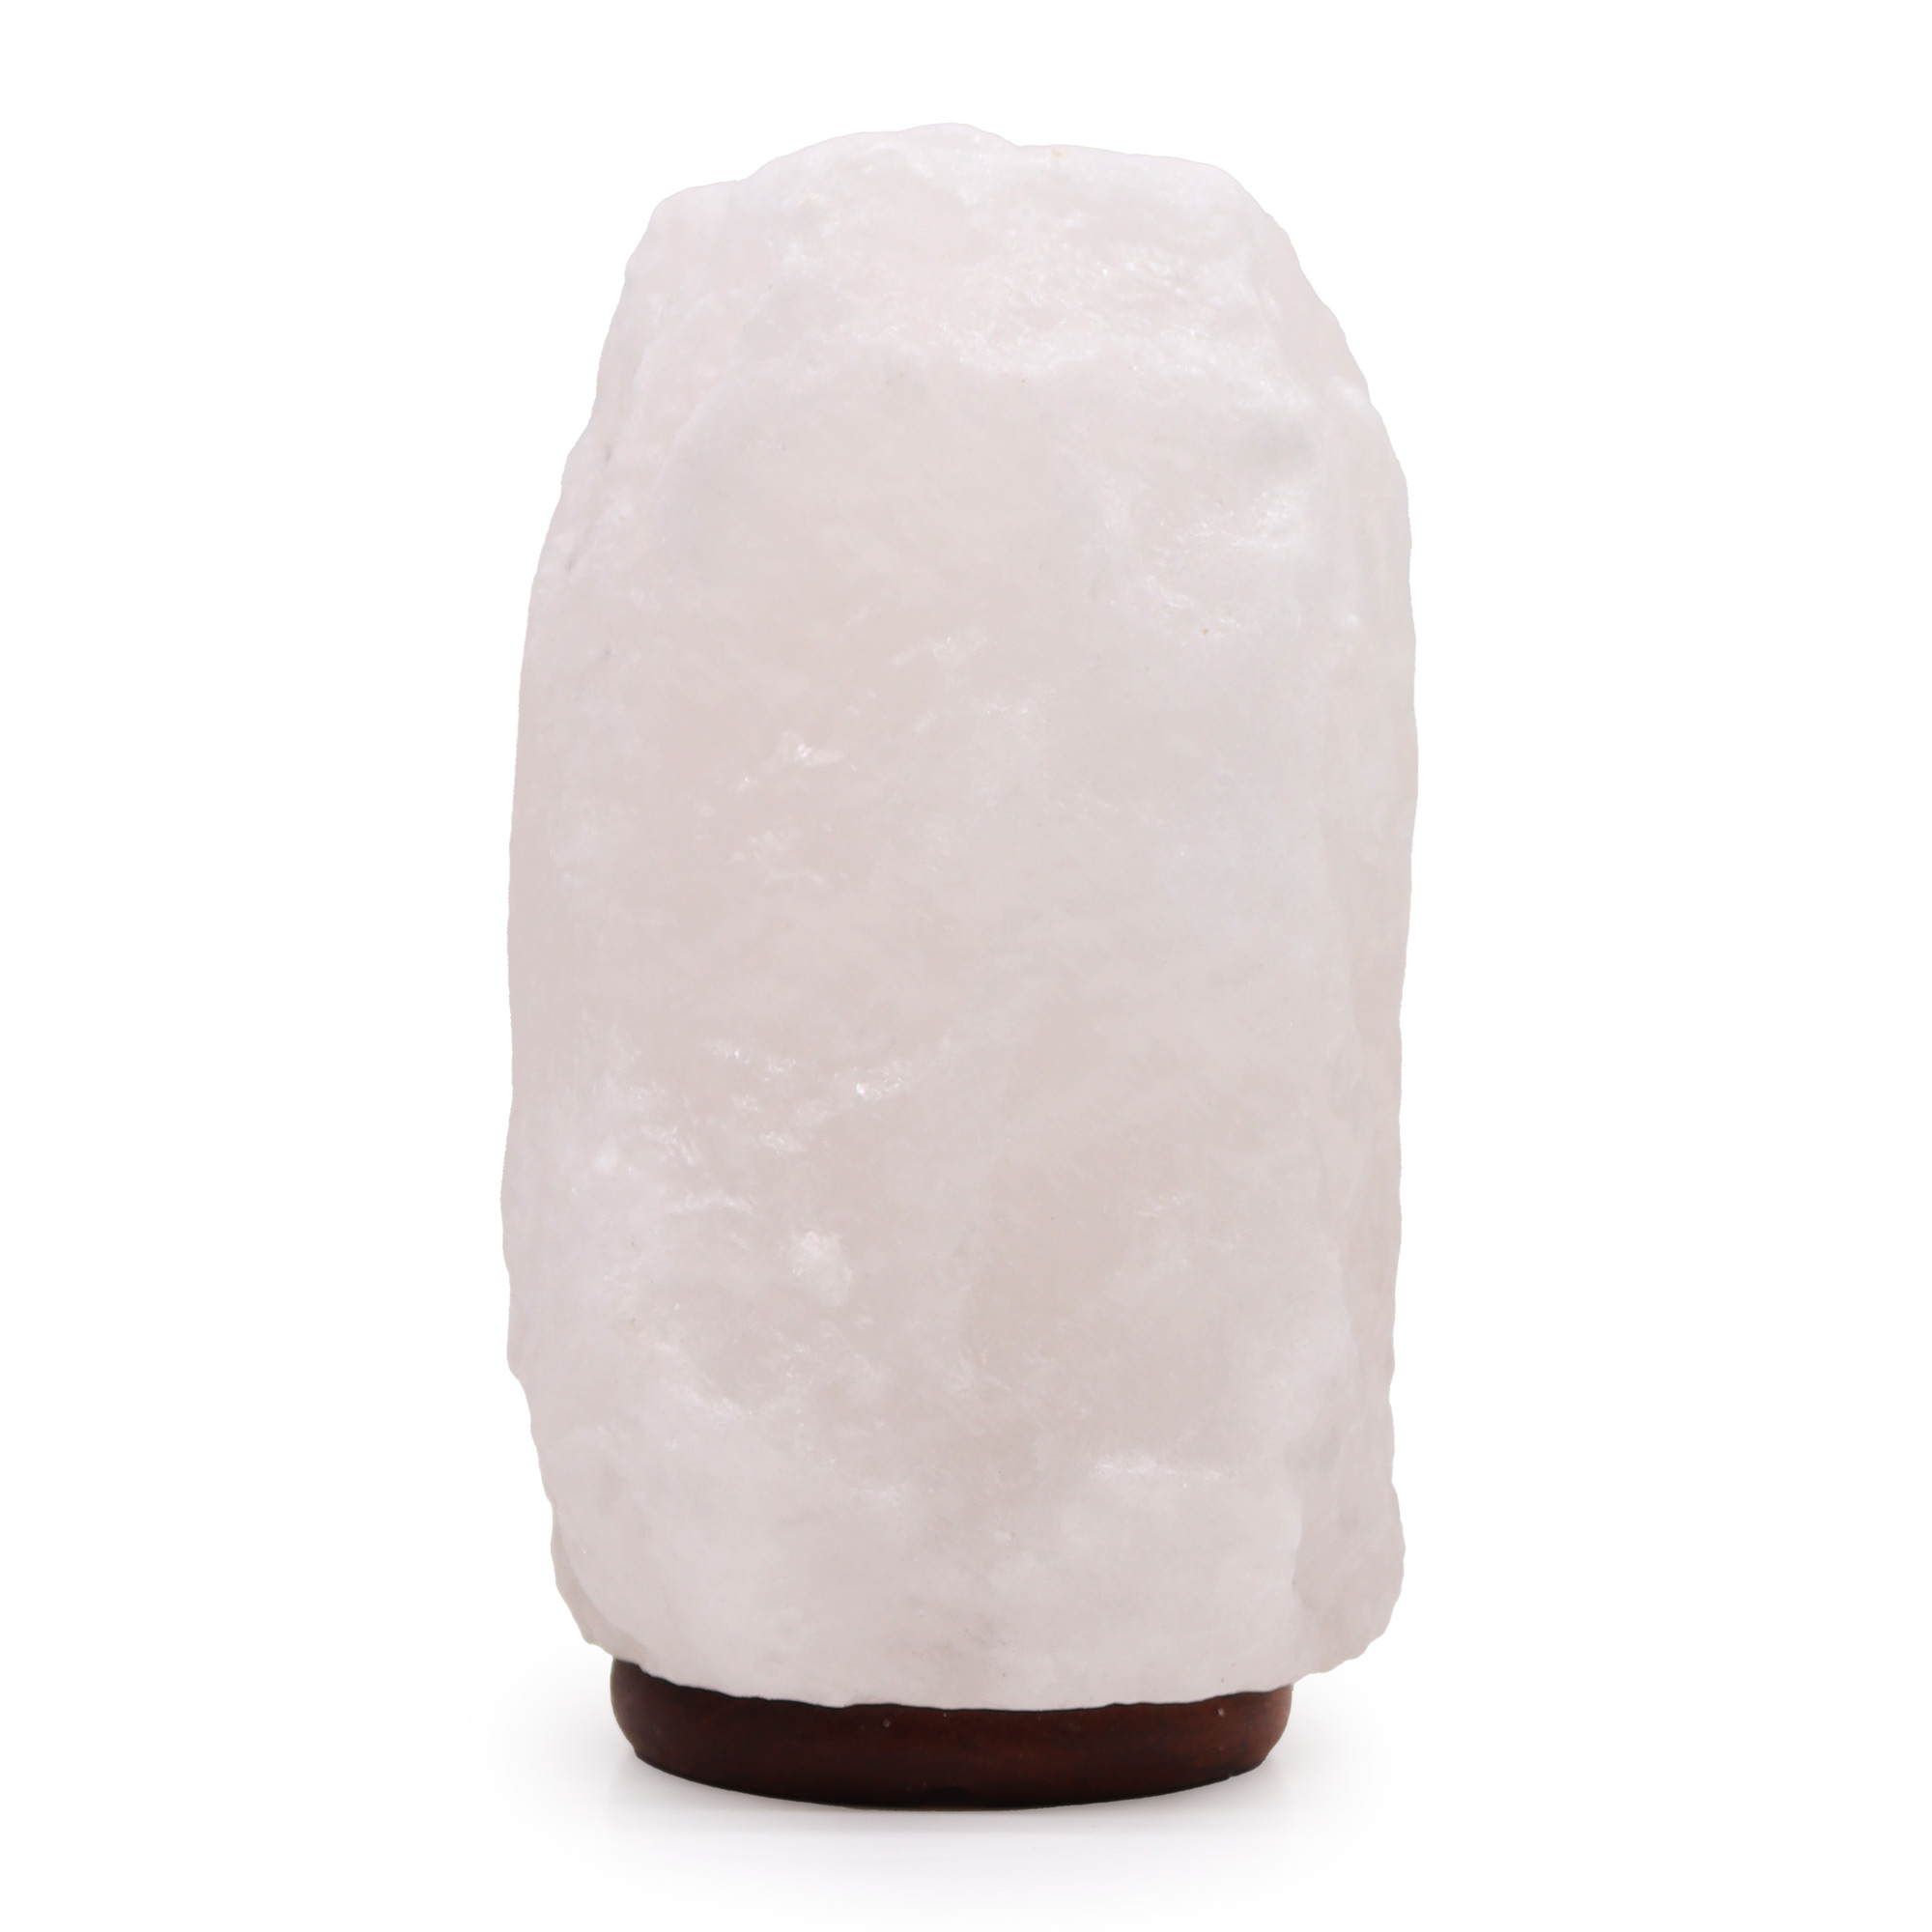 Crystal Rock Himalayan Salt Lamp - & Base apx 8-10kg